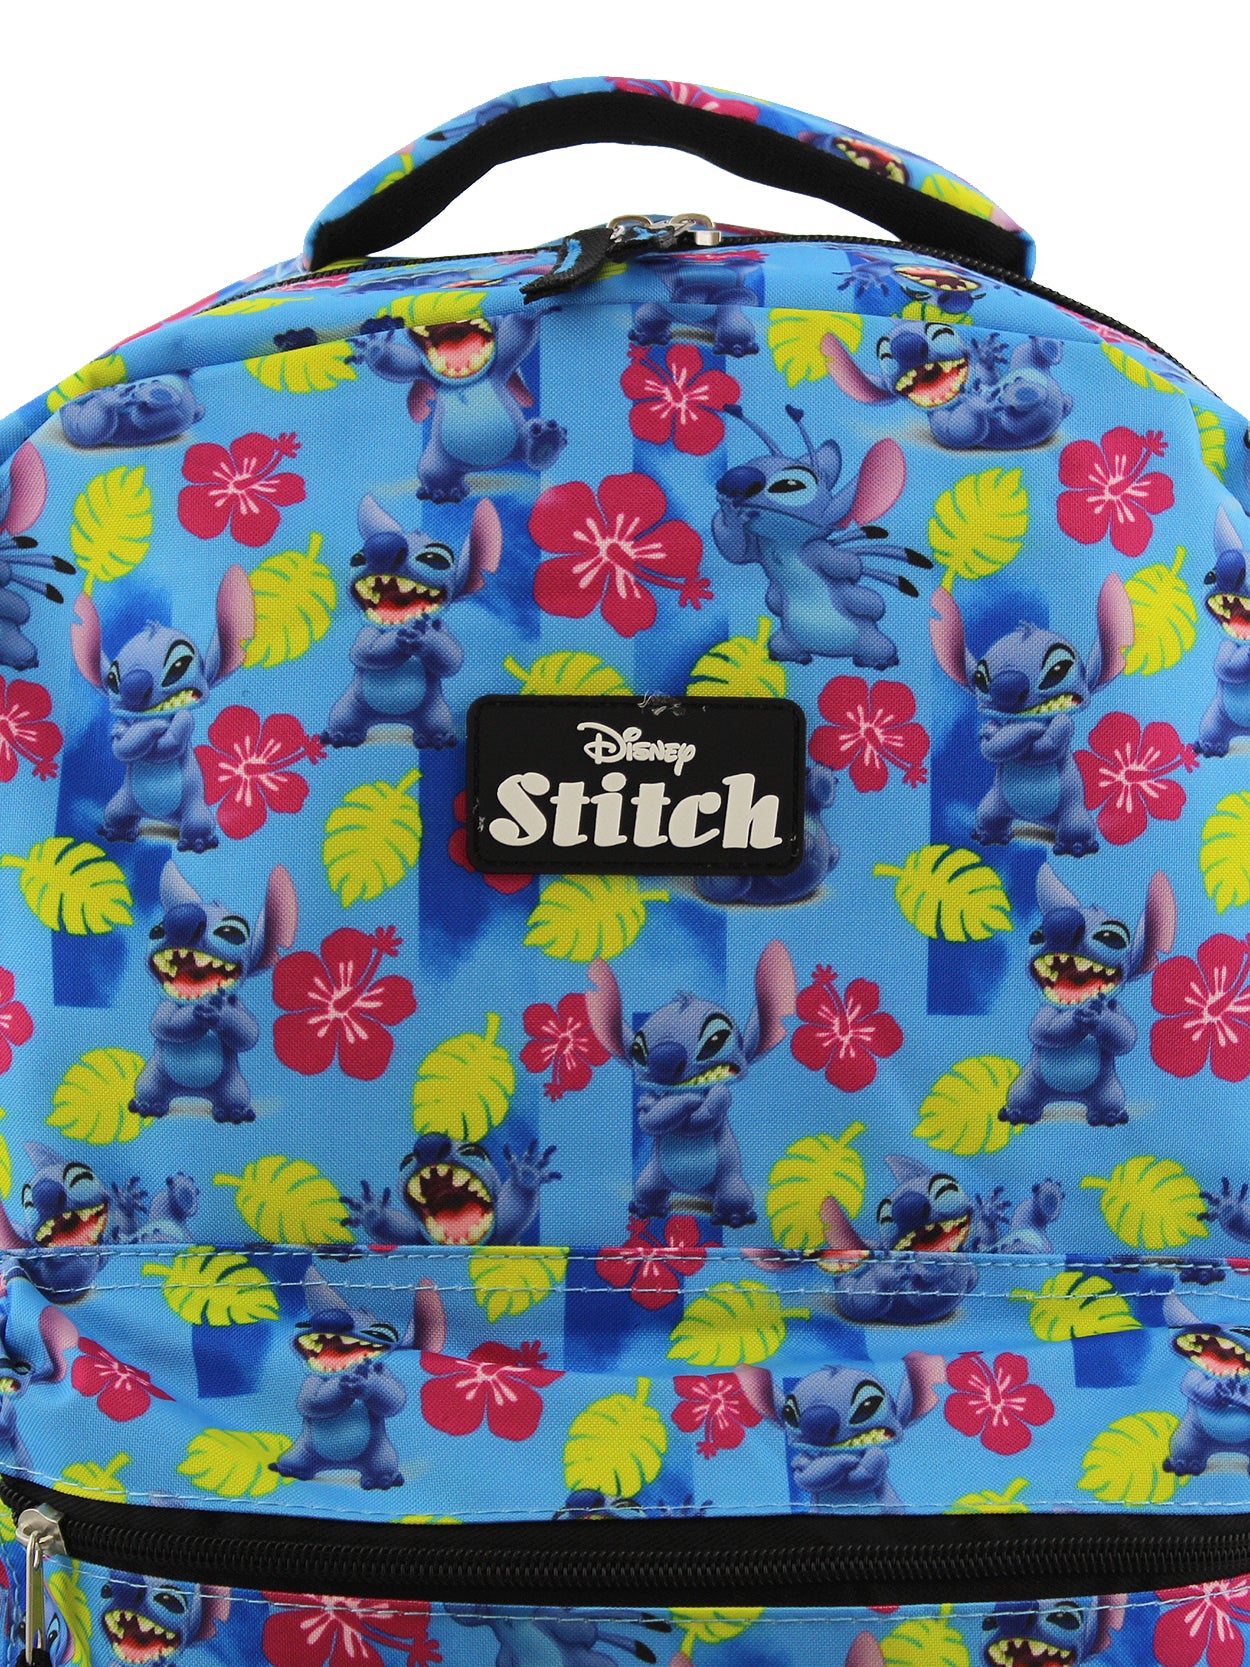 Disney Stitch Bag for Girls, Lilo and Stitch Cross Body Bag | eBay